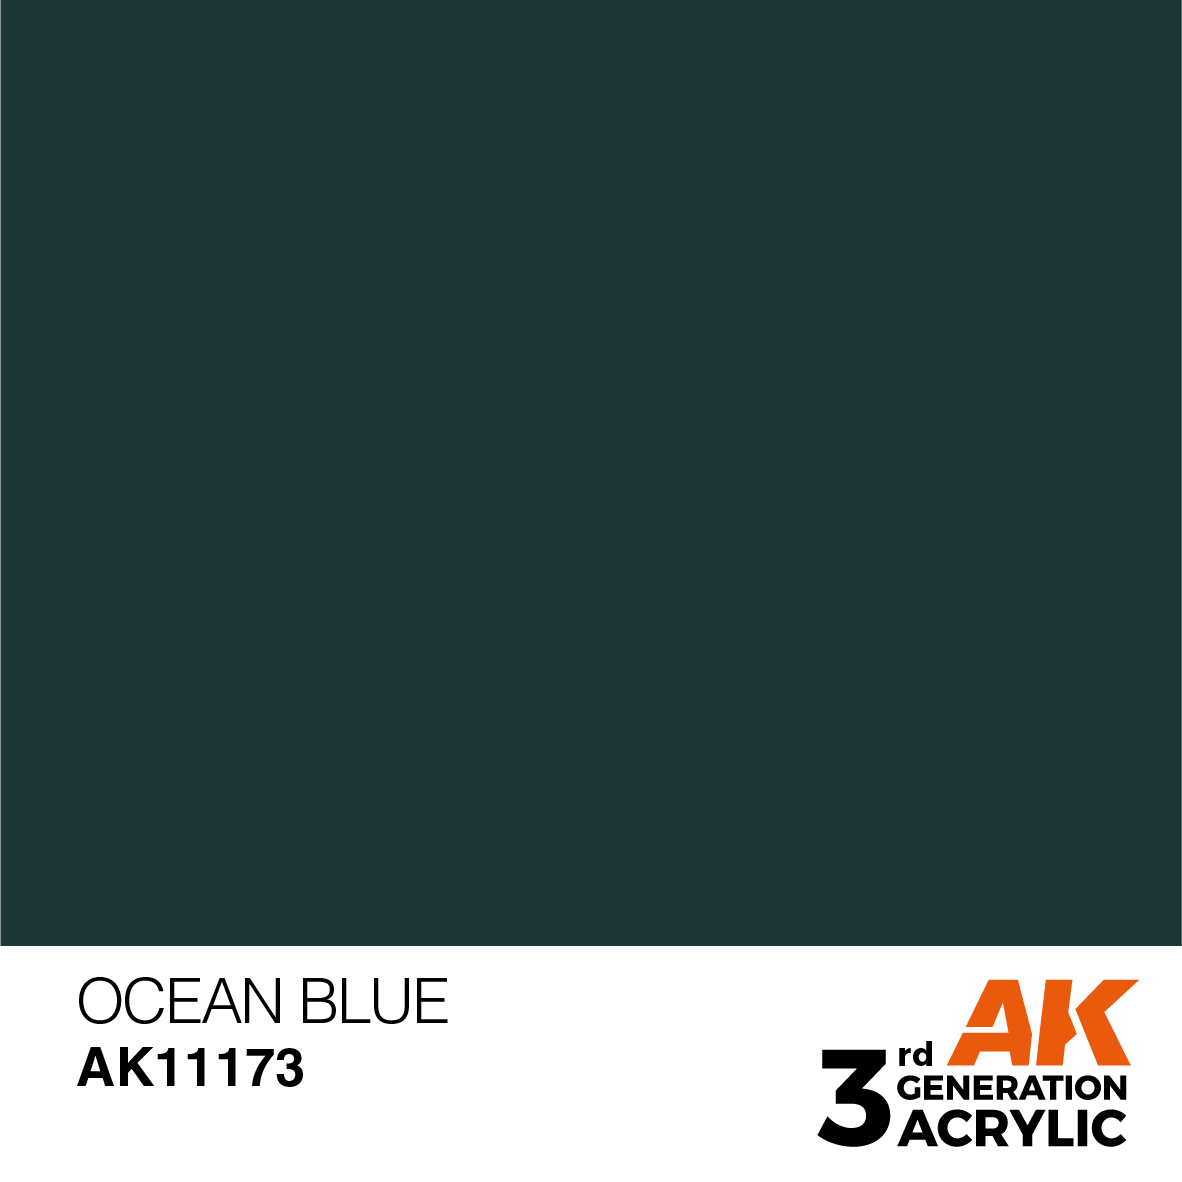 OCEAN BLUE – STANDARD